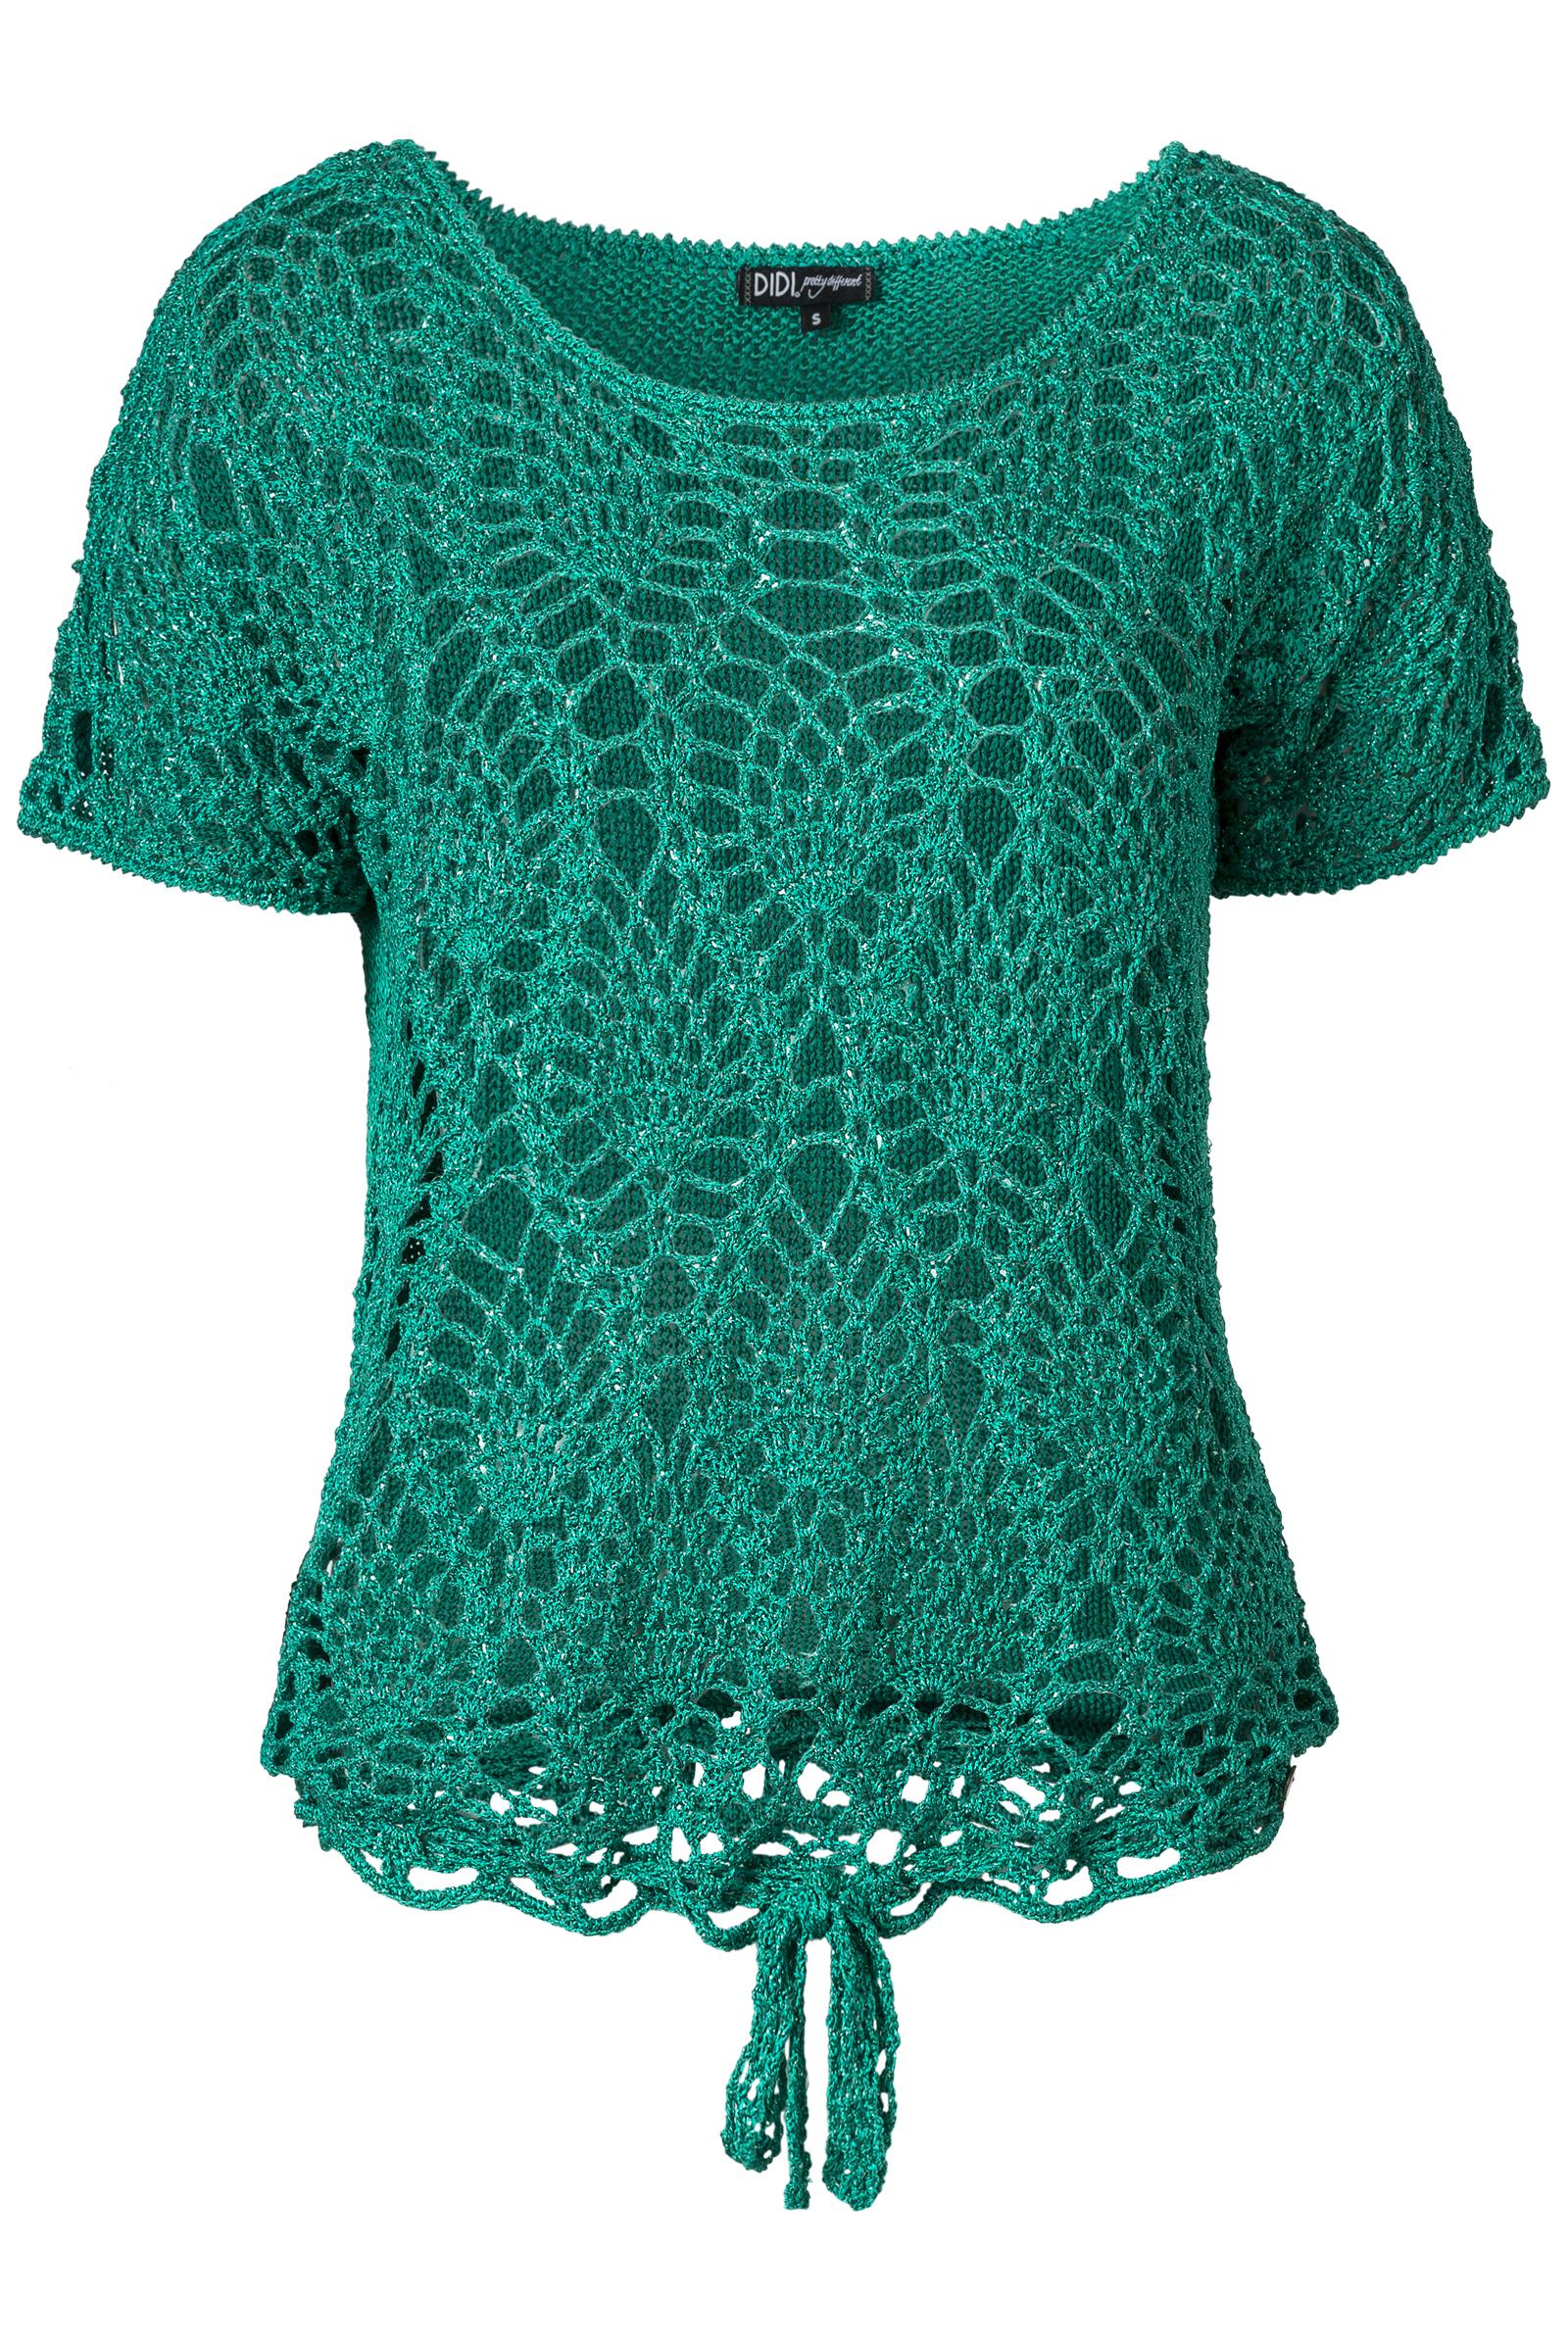 Kanten blouse - Didi - 39,95 euro